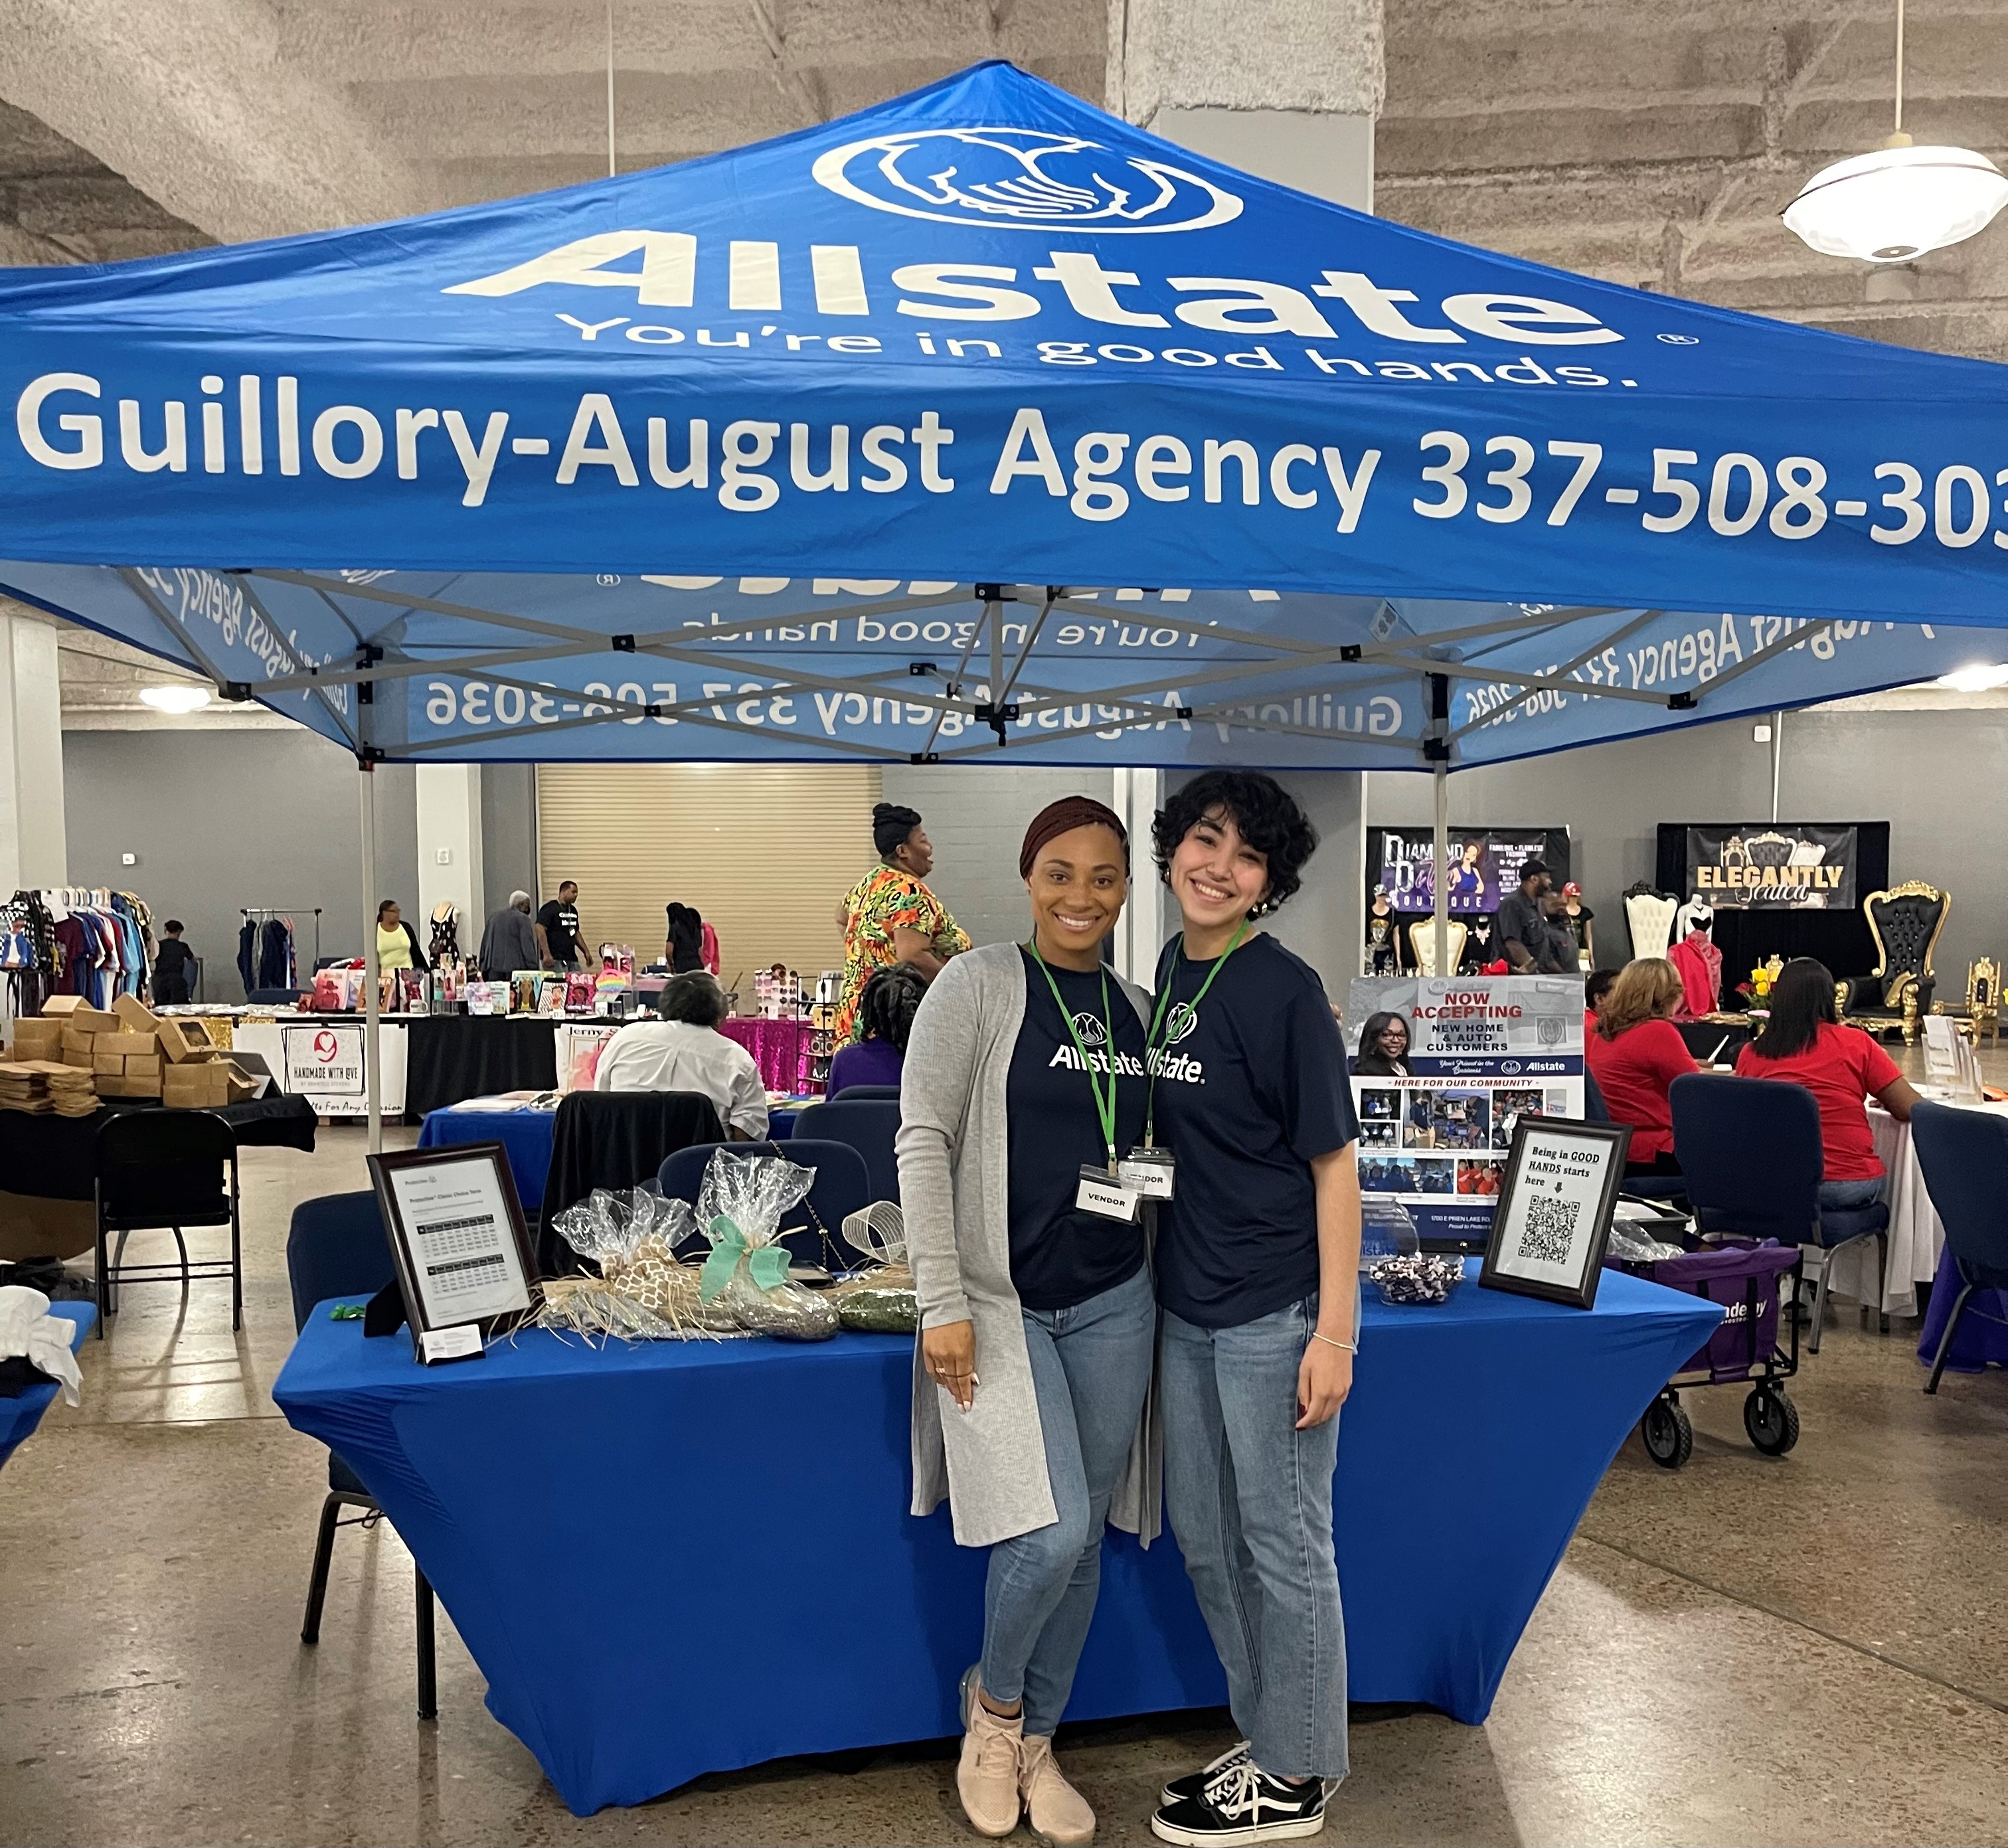 Tuwanna Guillory-August: Allstate Insurance Lake Charles (337)305-7676